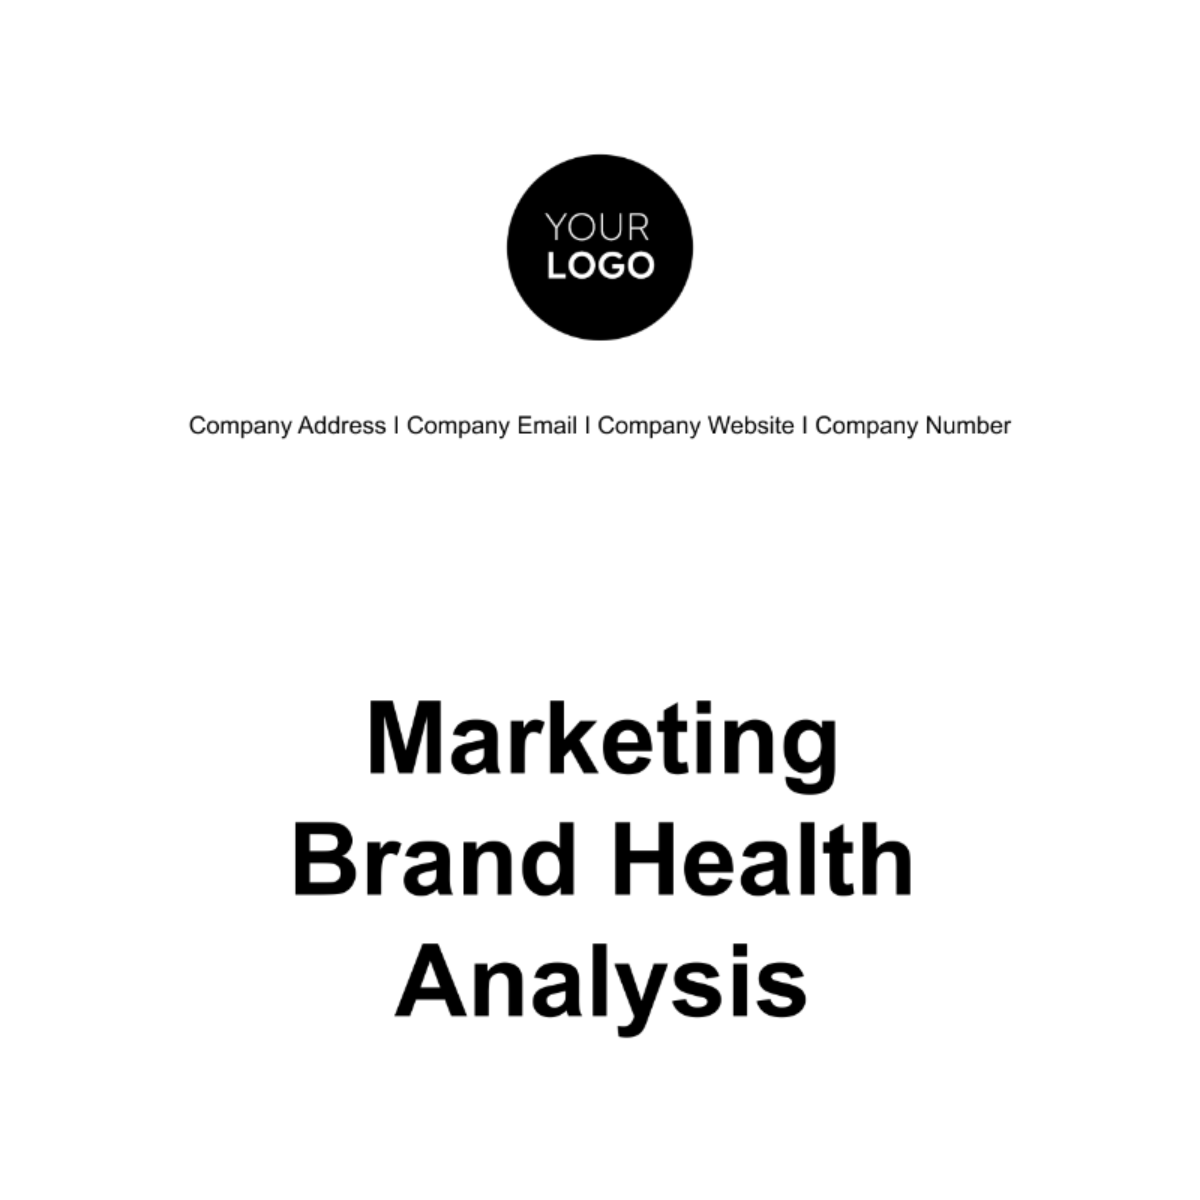 Marketing Brand Health Analysis Template